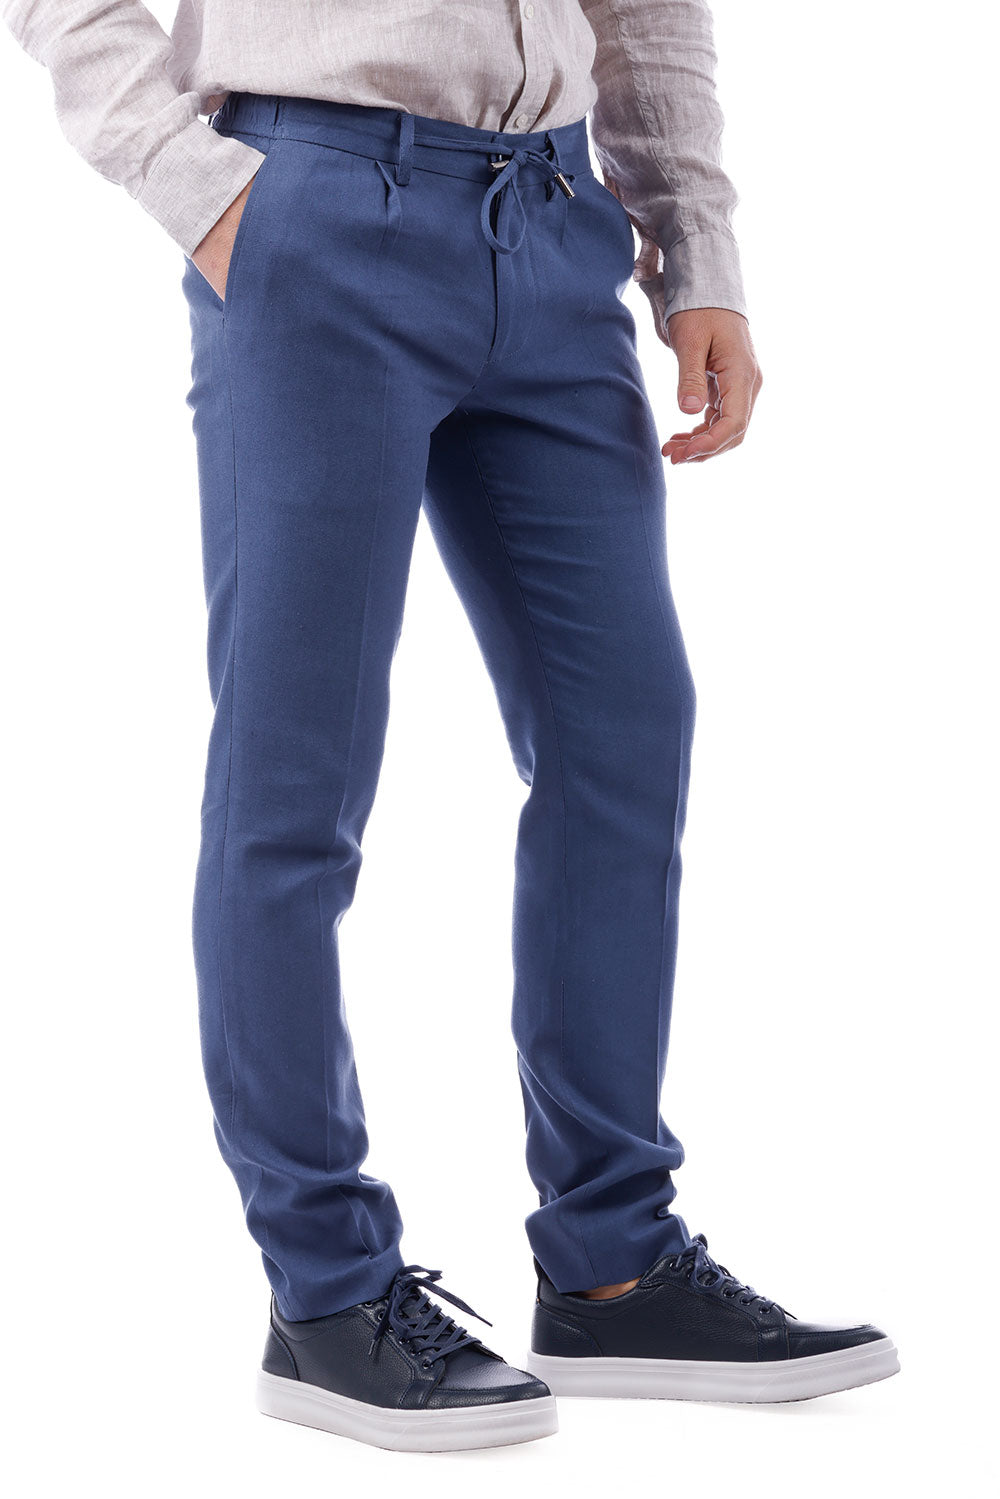 Barabas Men's Adjustable Waistband Drawstring Linen Pants 4CP30 Blue